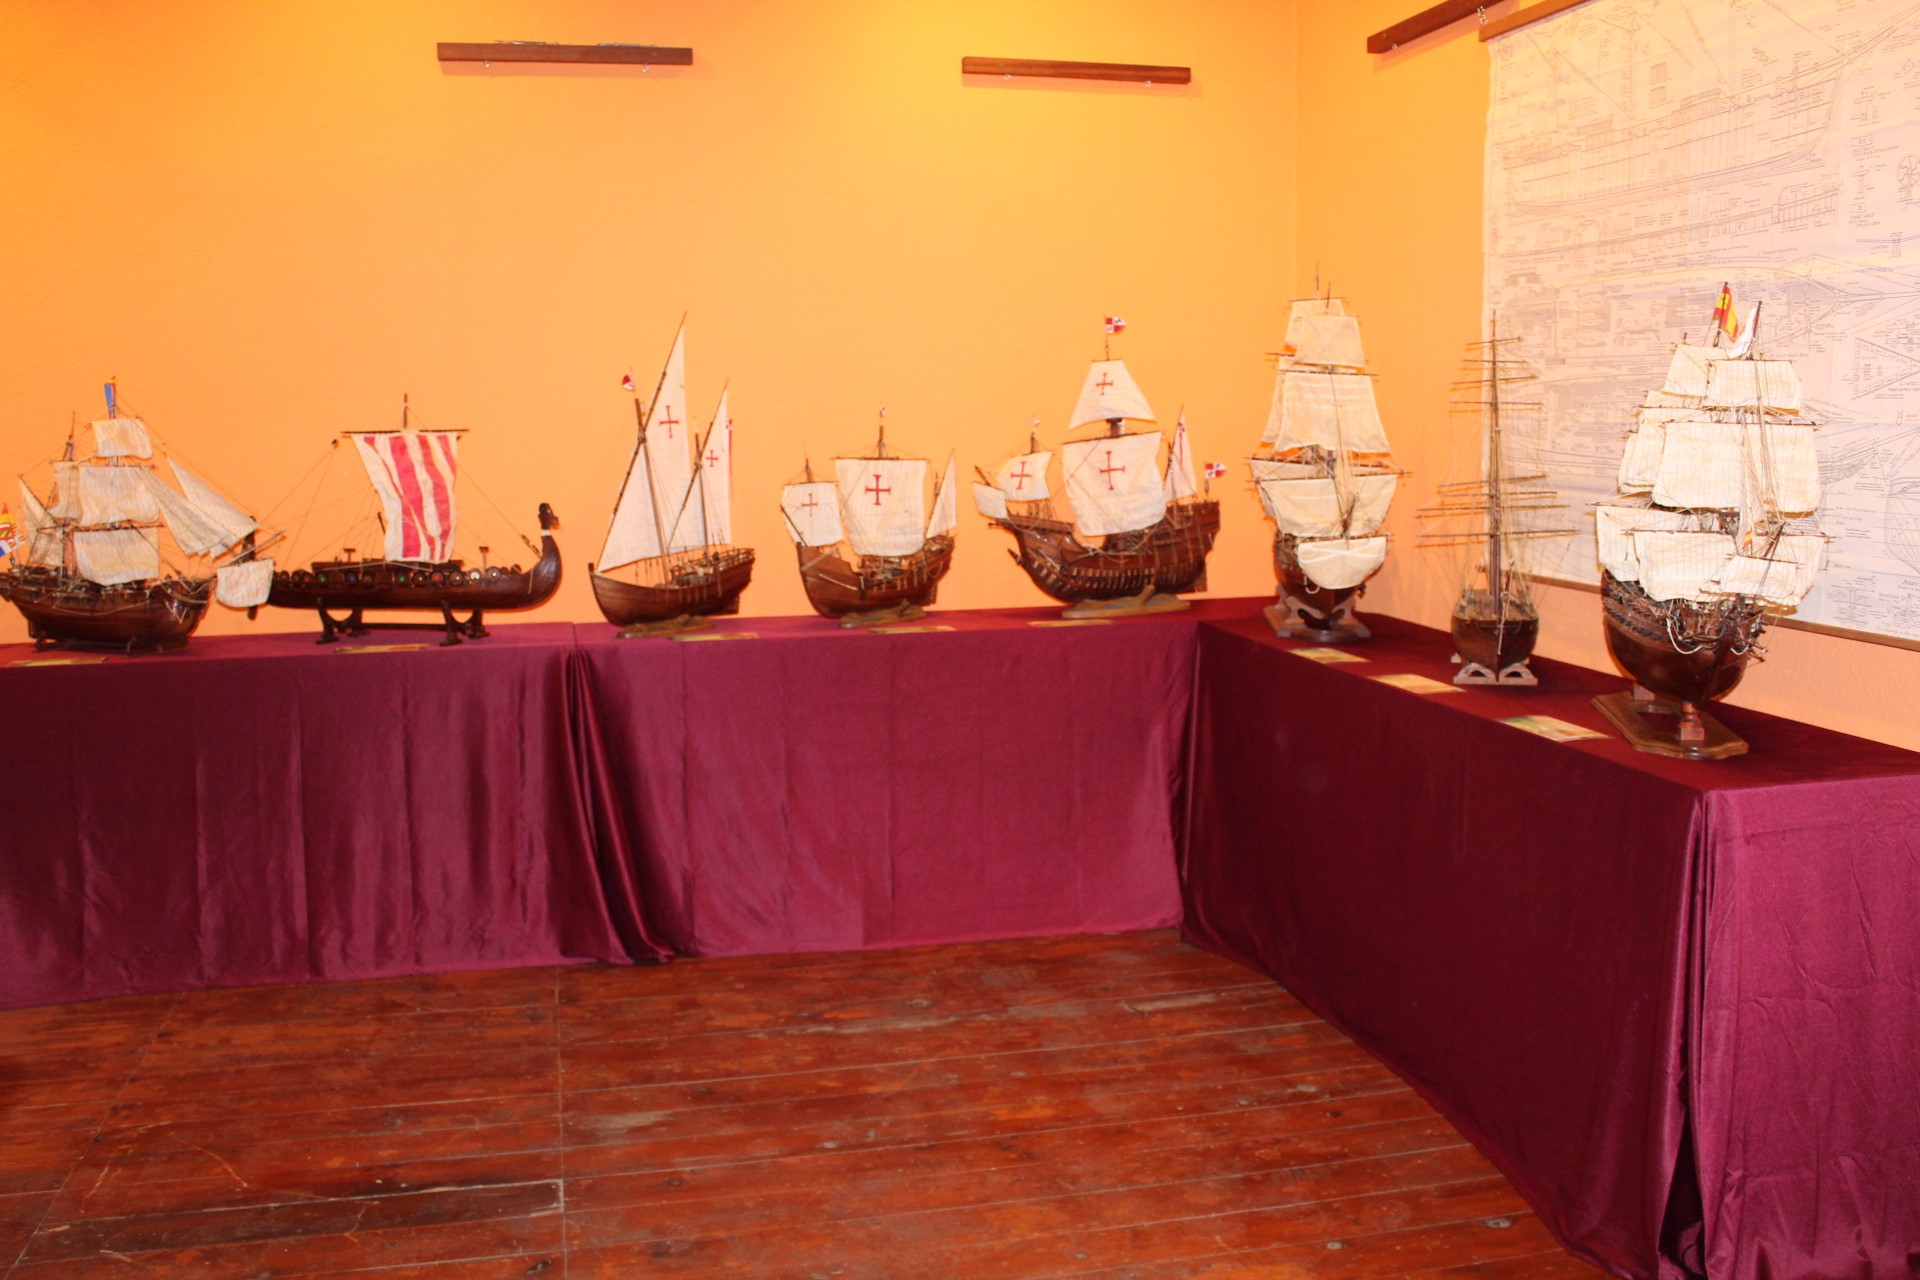 Museo invita a navegar con exhibición sobre modelismo naval